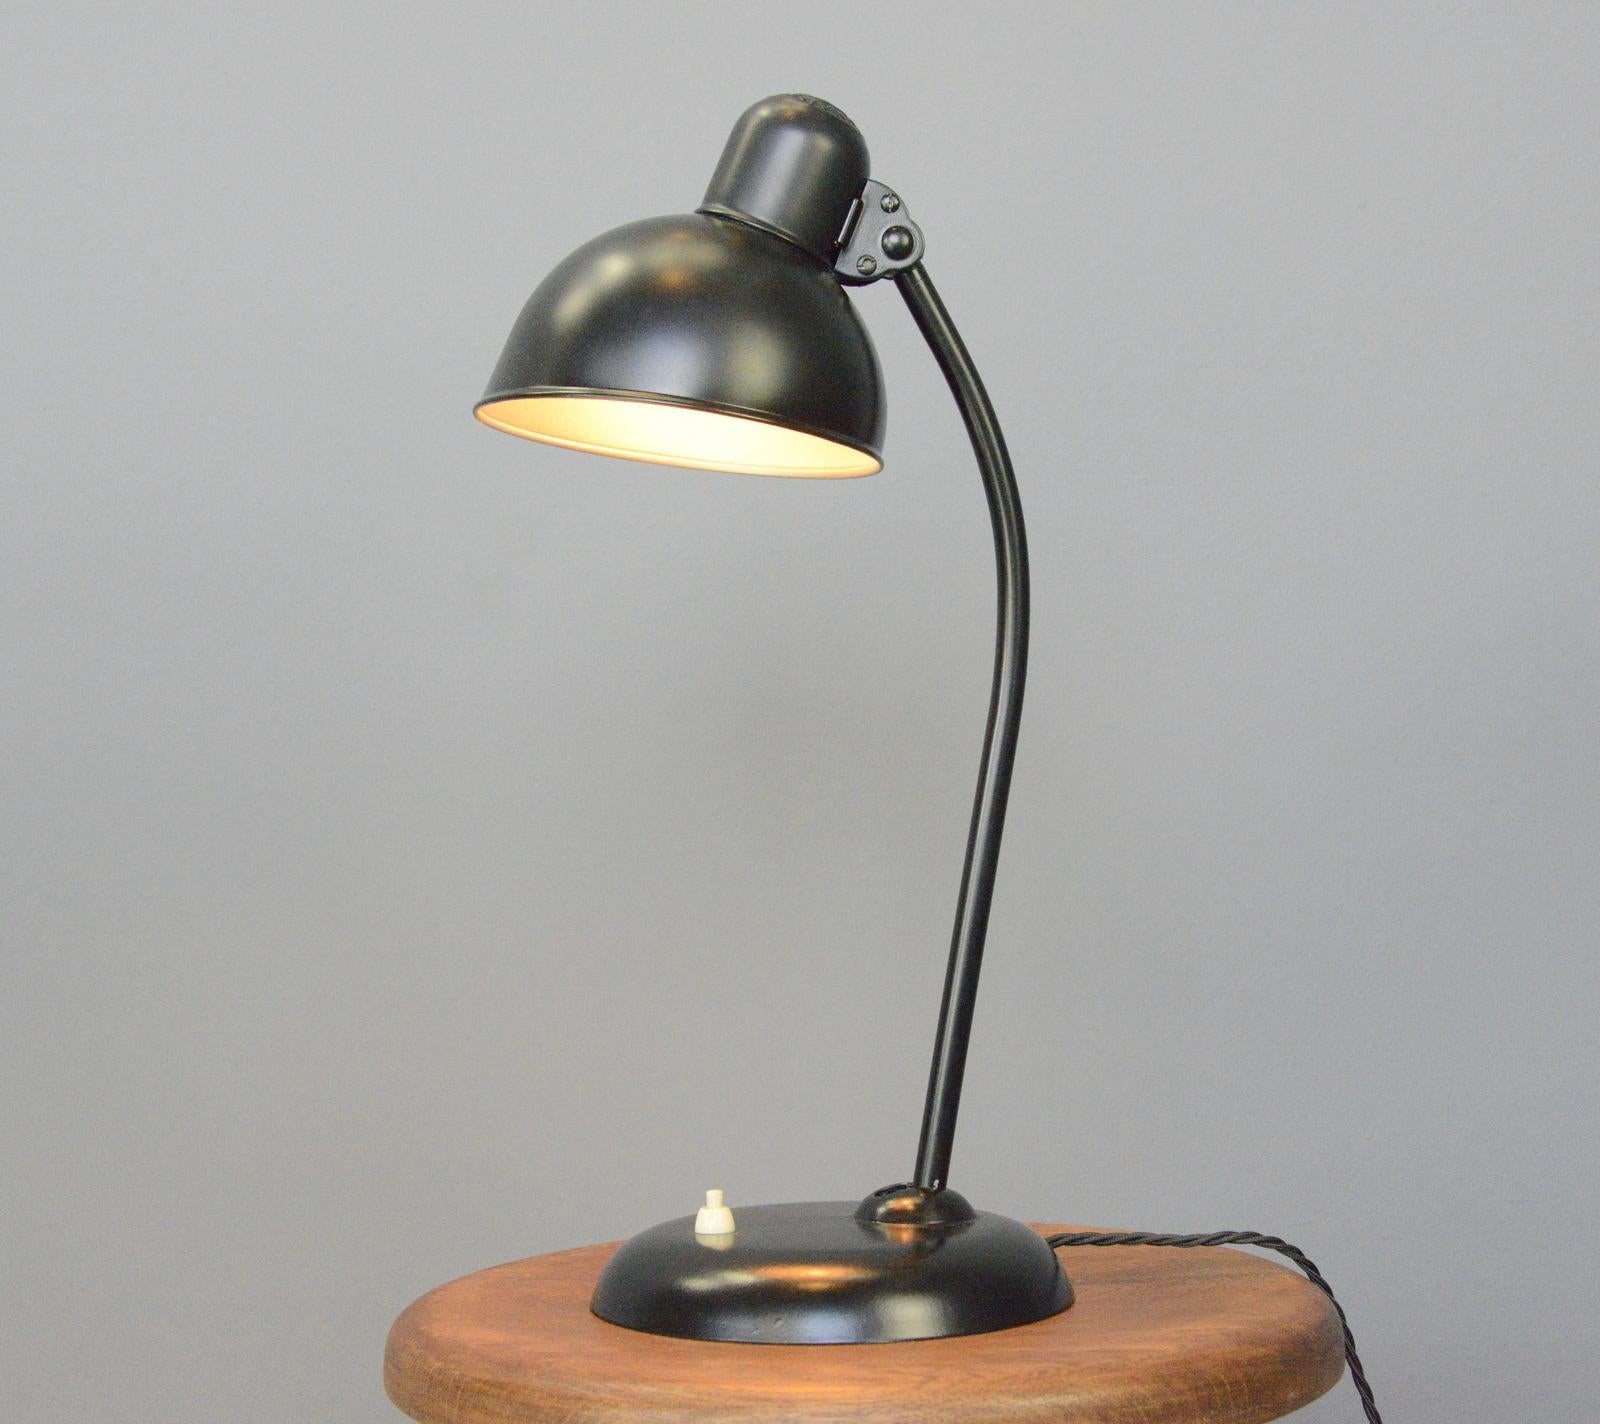 Lámparas de mesa Modelo 6556 de Kaiser Idell Circa años 30.

- Pantalla de acero con la marca Kaiser Idell en relieve
- Interruptor de encendido/apagado en la base
- Admite bombillas con casquillo E27
- Brazo y pantalla regulables
- Diseñado